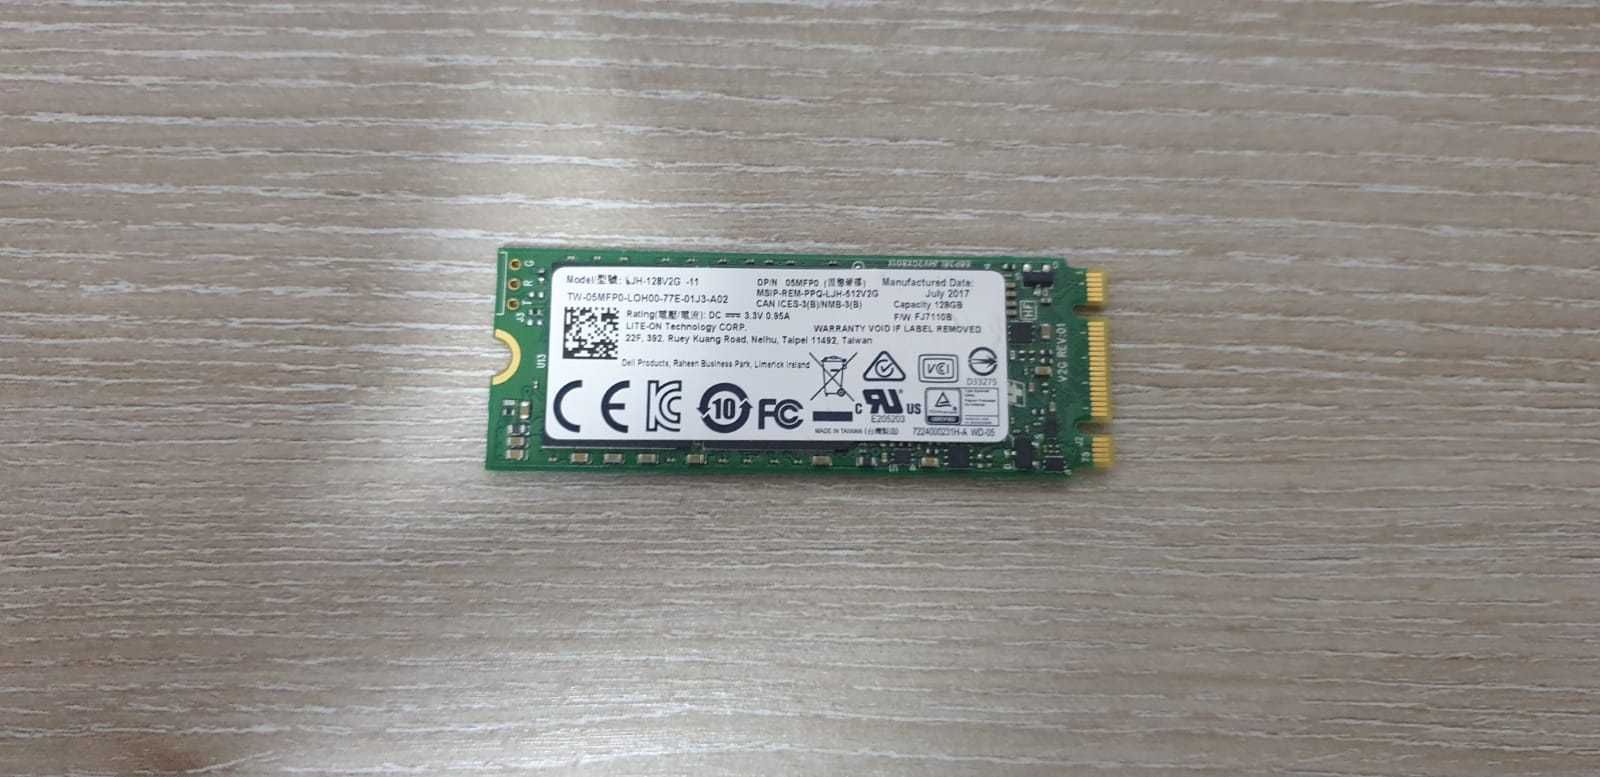 SSD 2260 Lite-On m.2 SATA 128GB